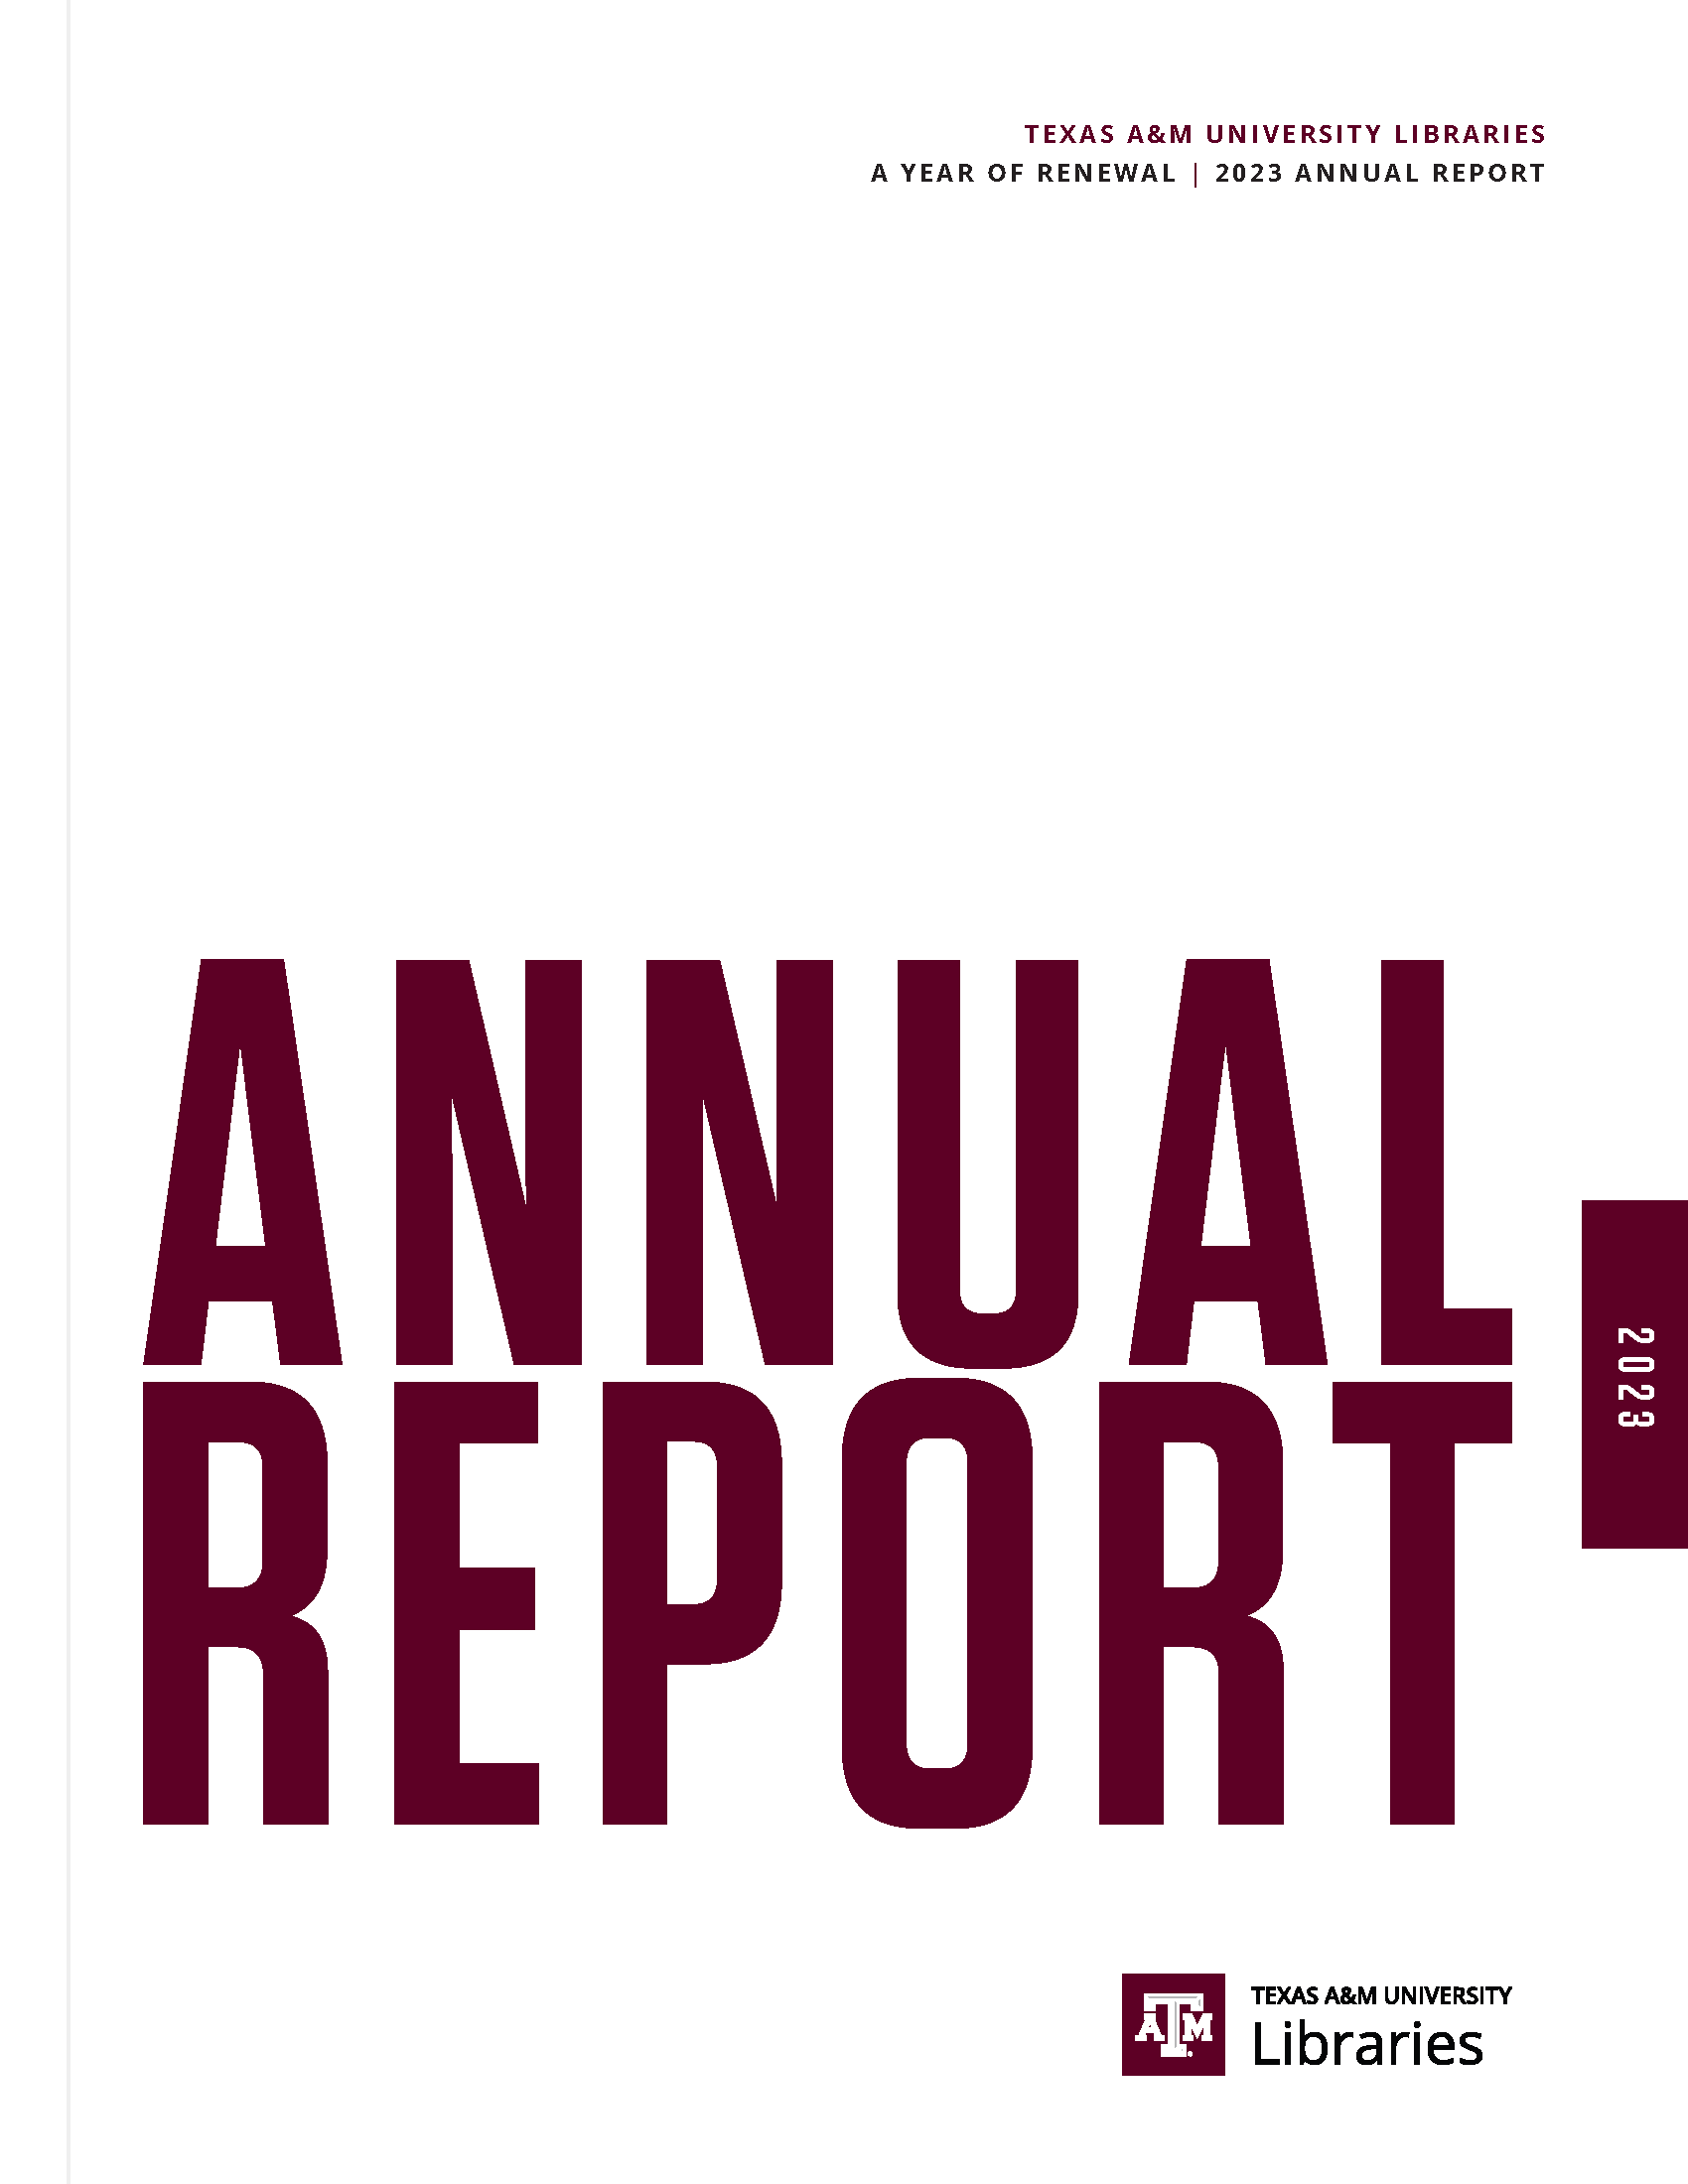 Annual report Cover